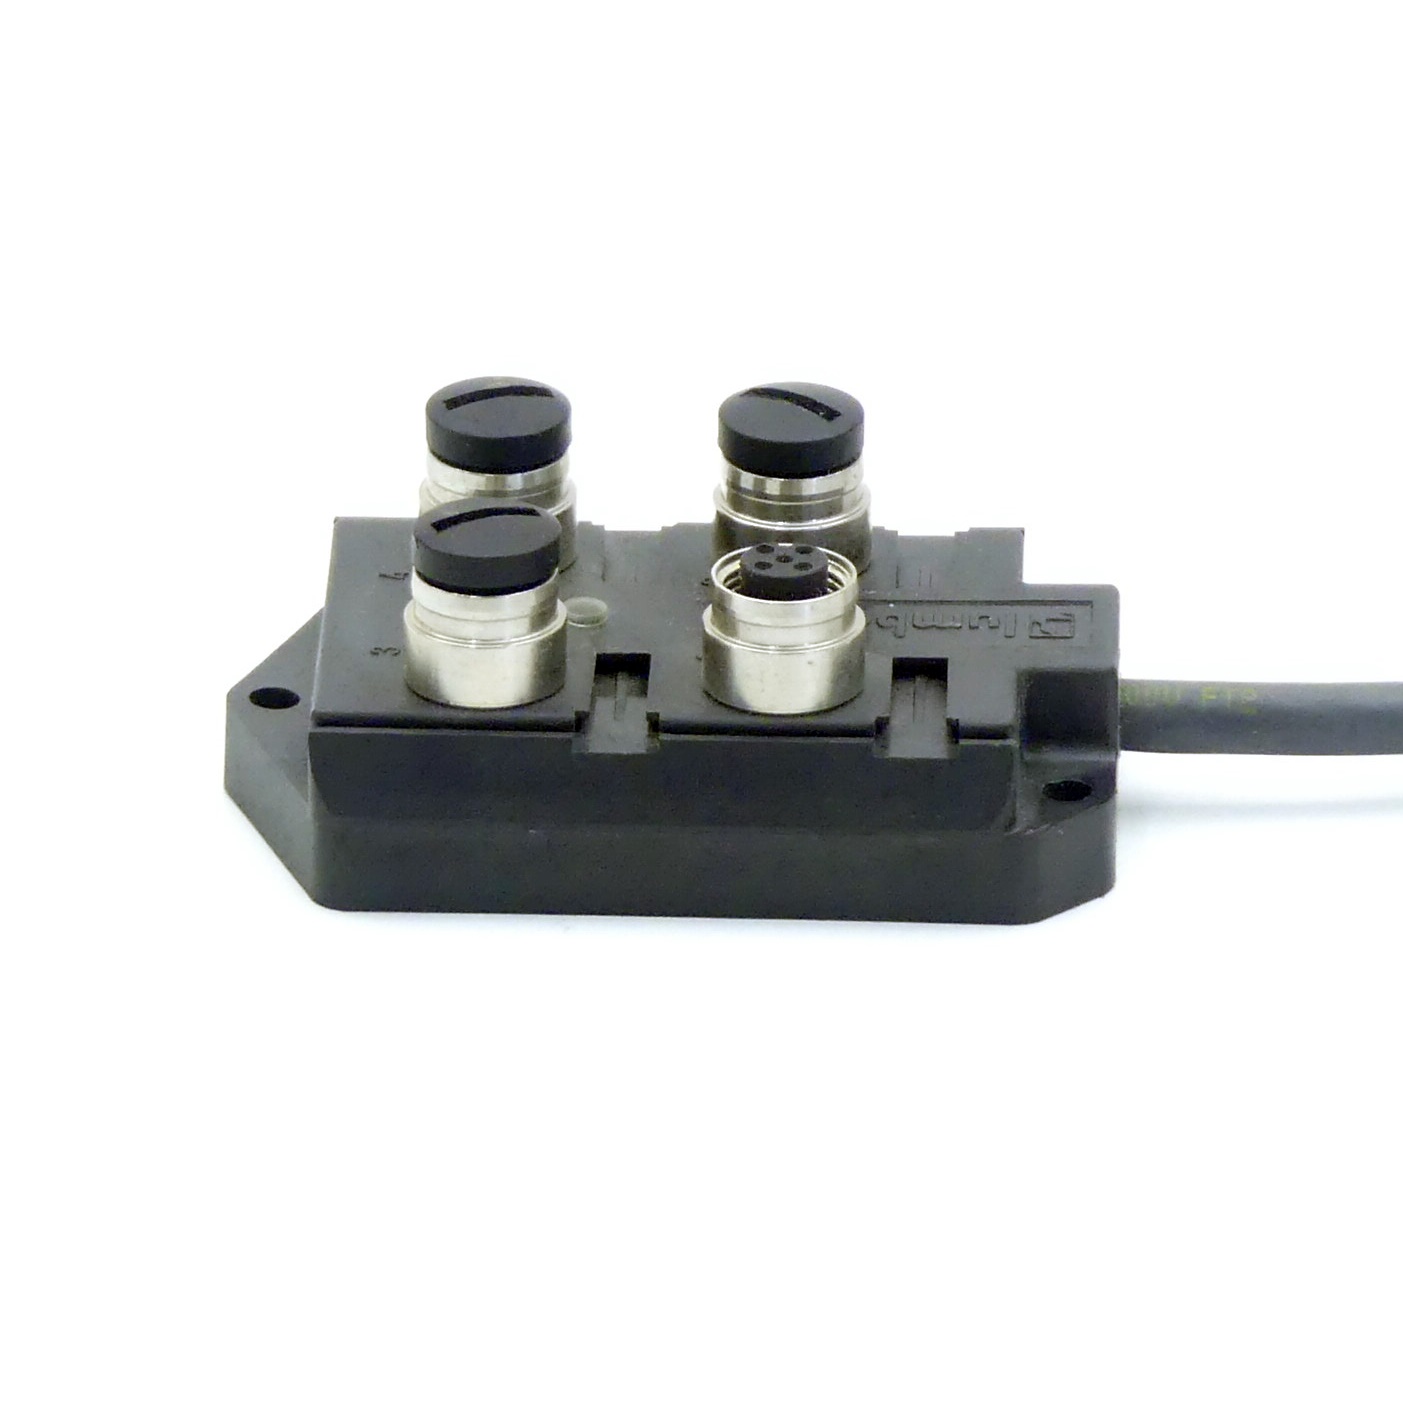 Actuator-Sensor-Box ASB 4/LED 5/4-328 /5M ESD 